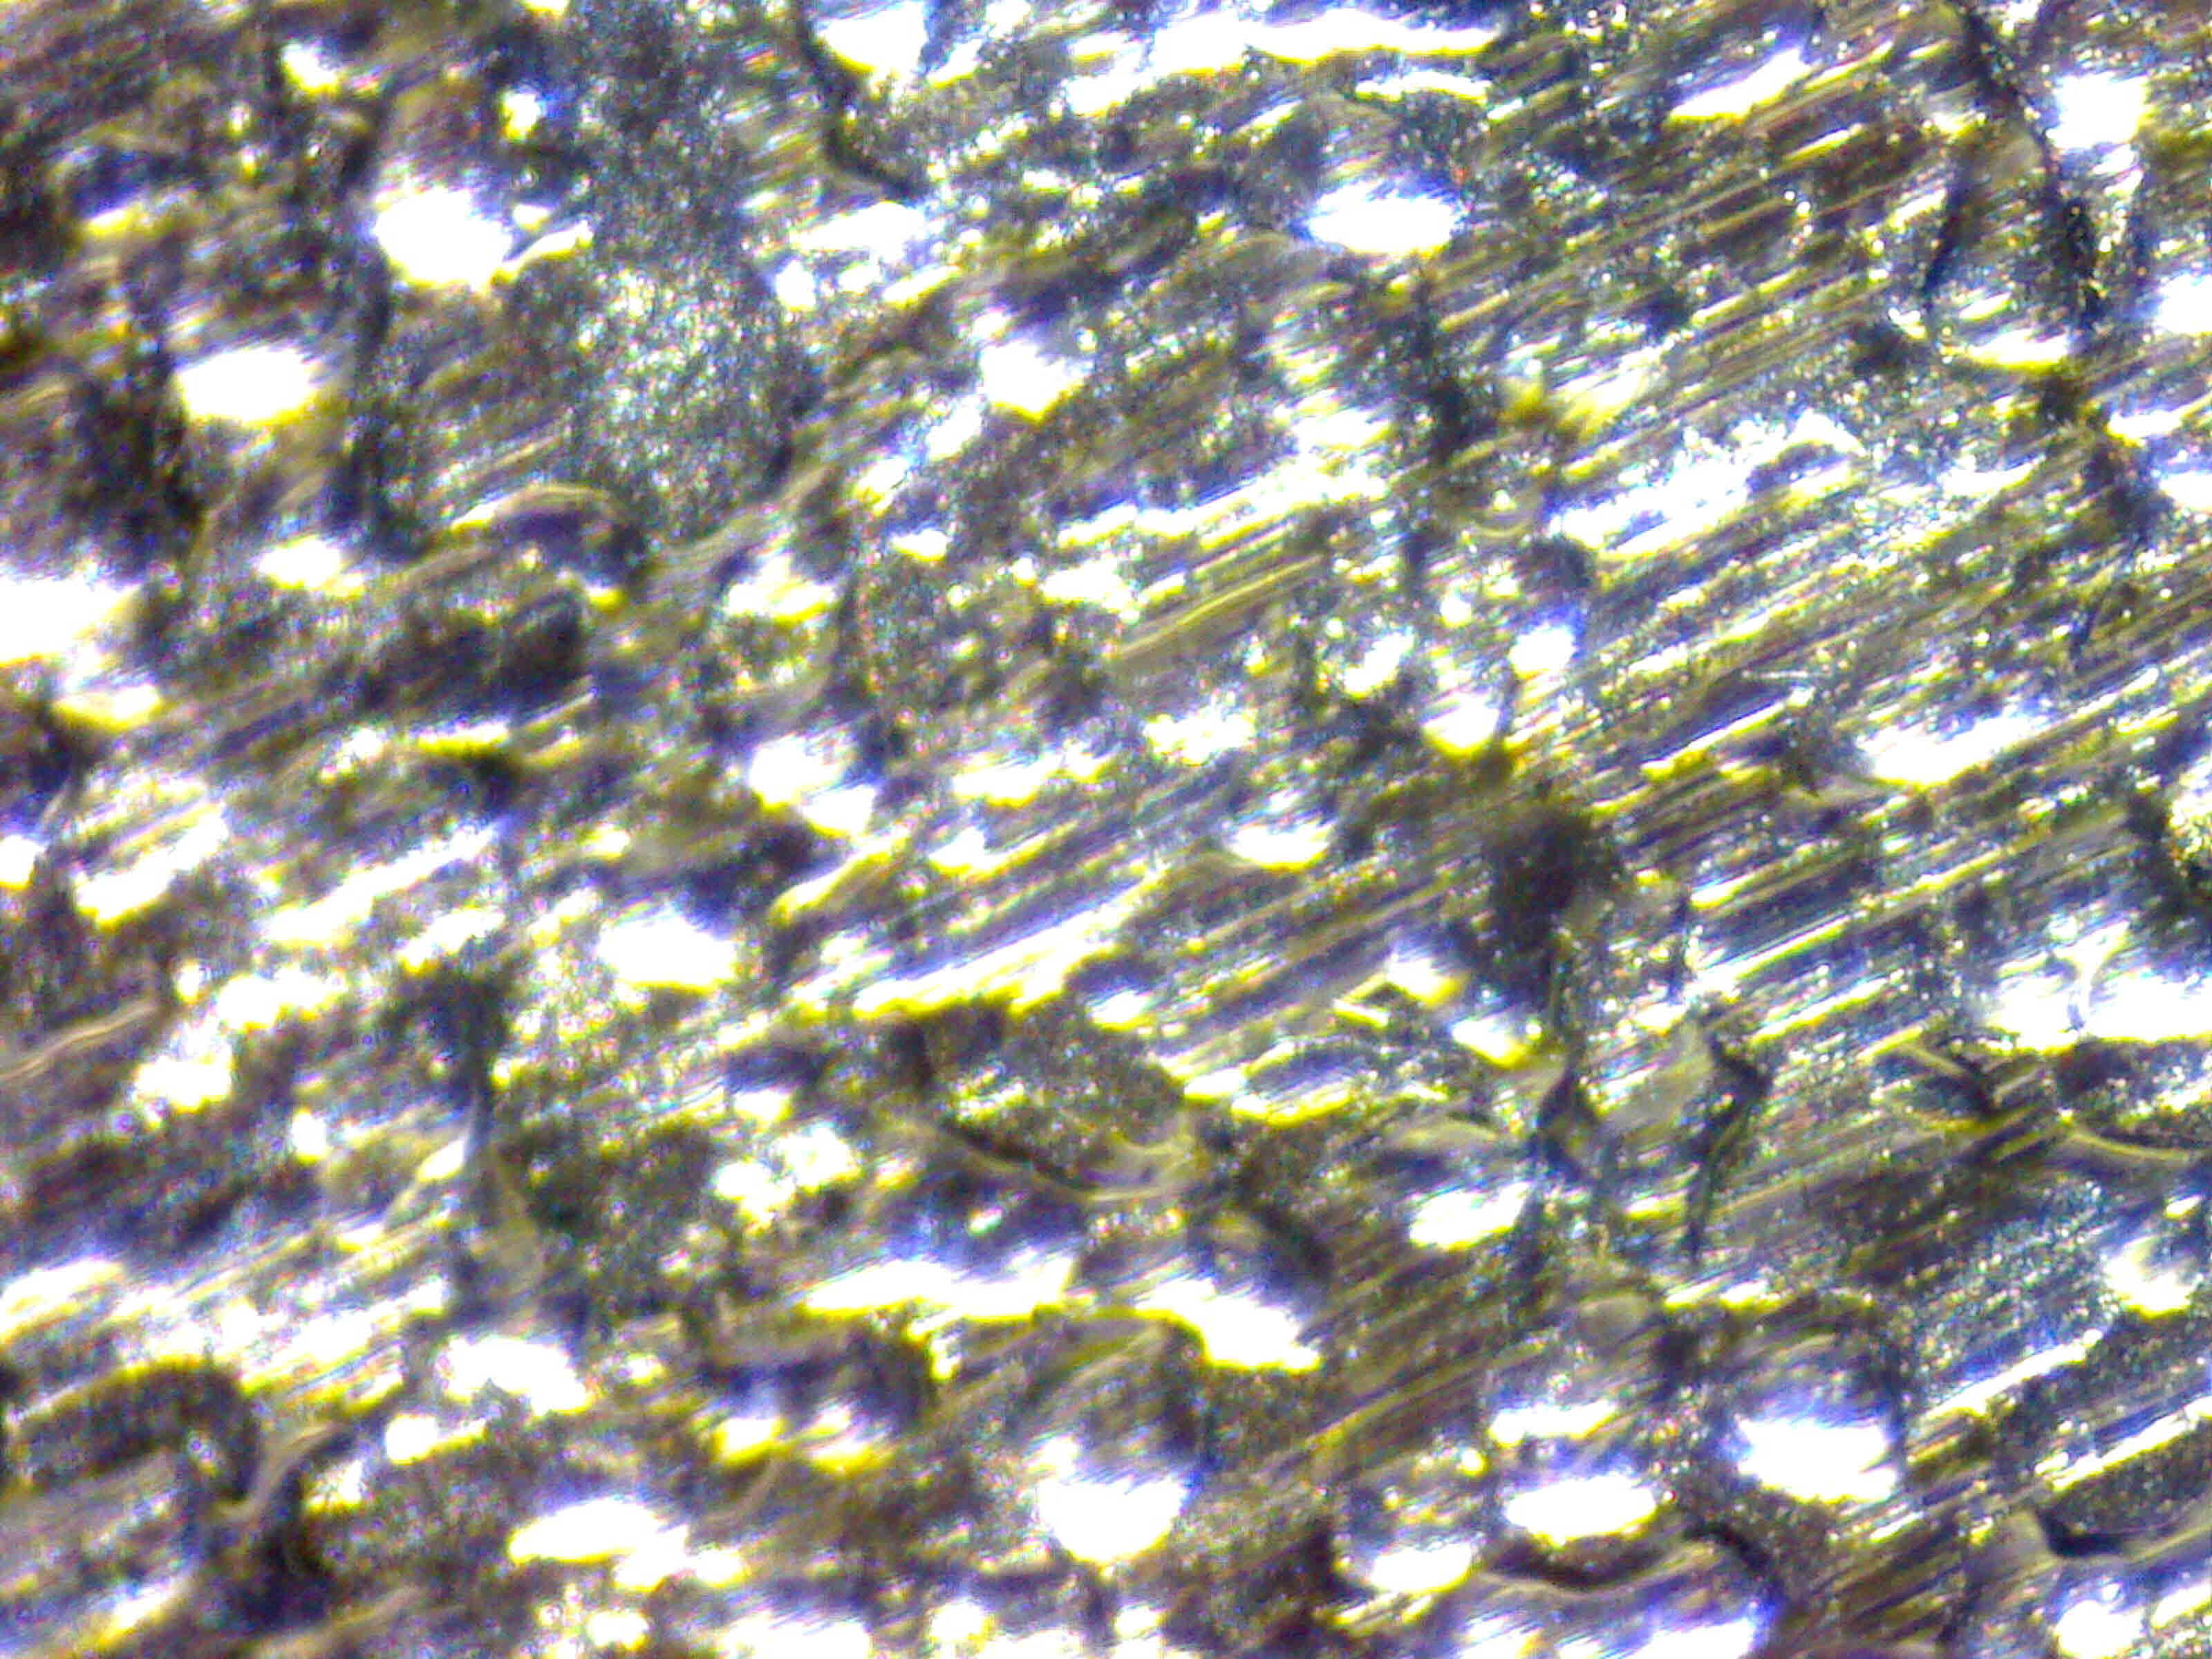 File:Mild steel sheet metal close up.jpg - Wikimedia Commons